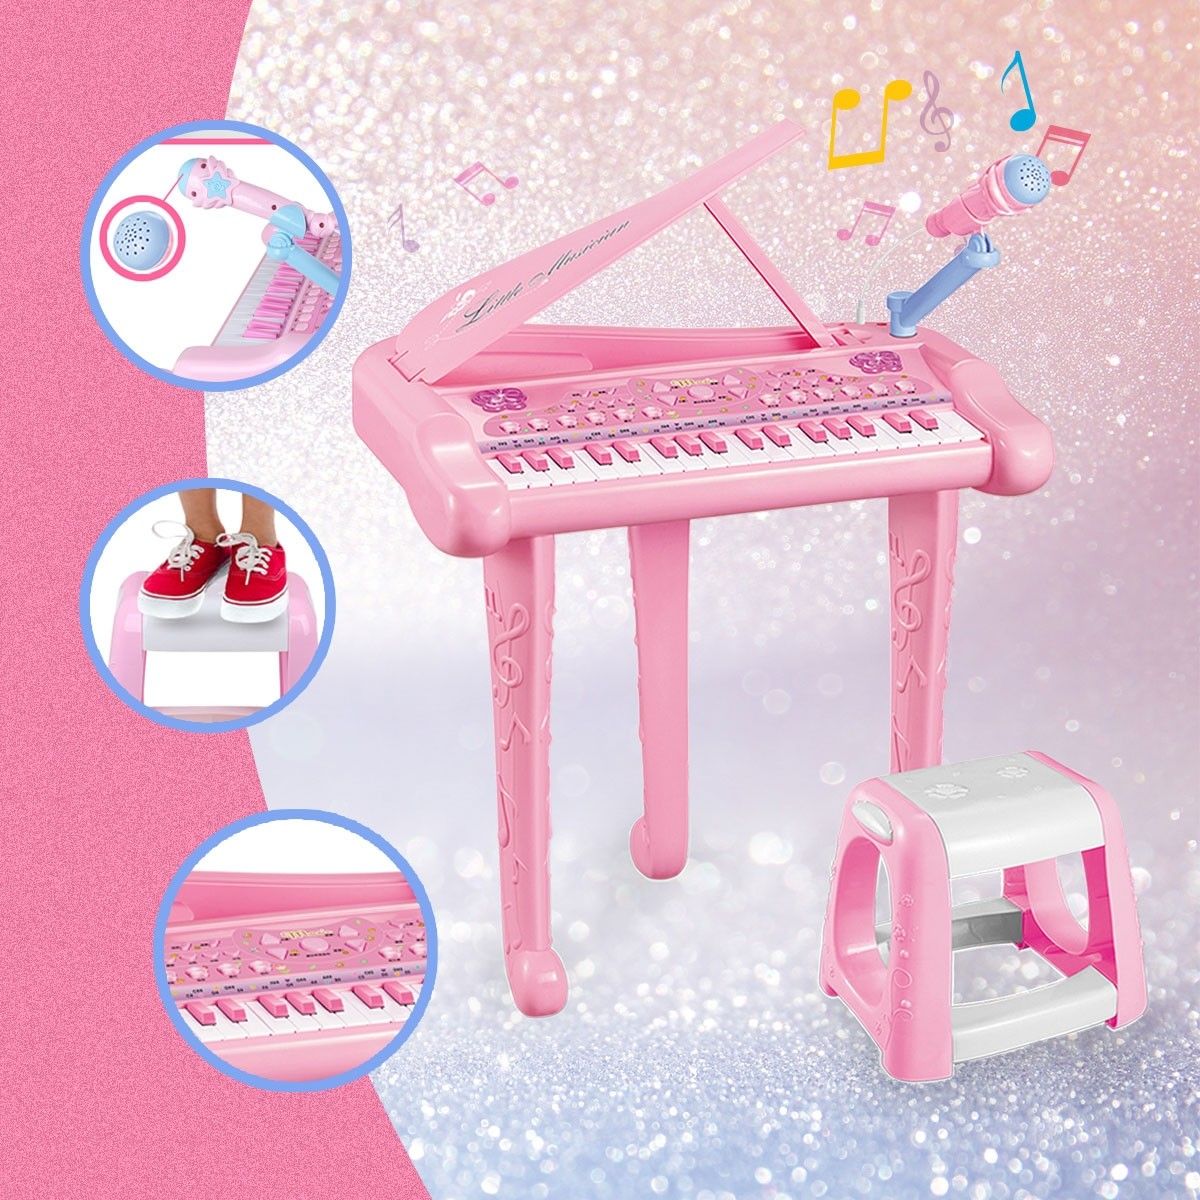 37 Key Kids Electronic Keyboard Piano Organ Musical Toy w/Microphone & Stool